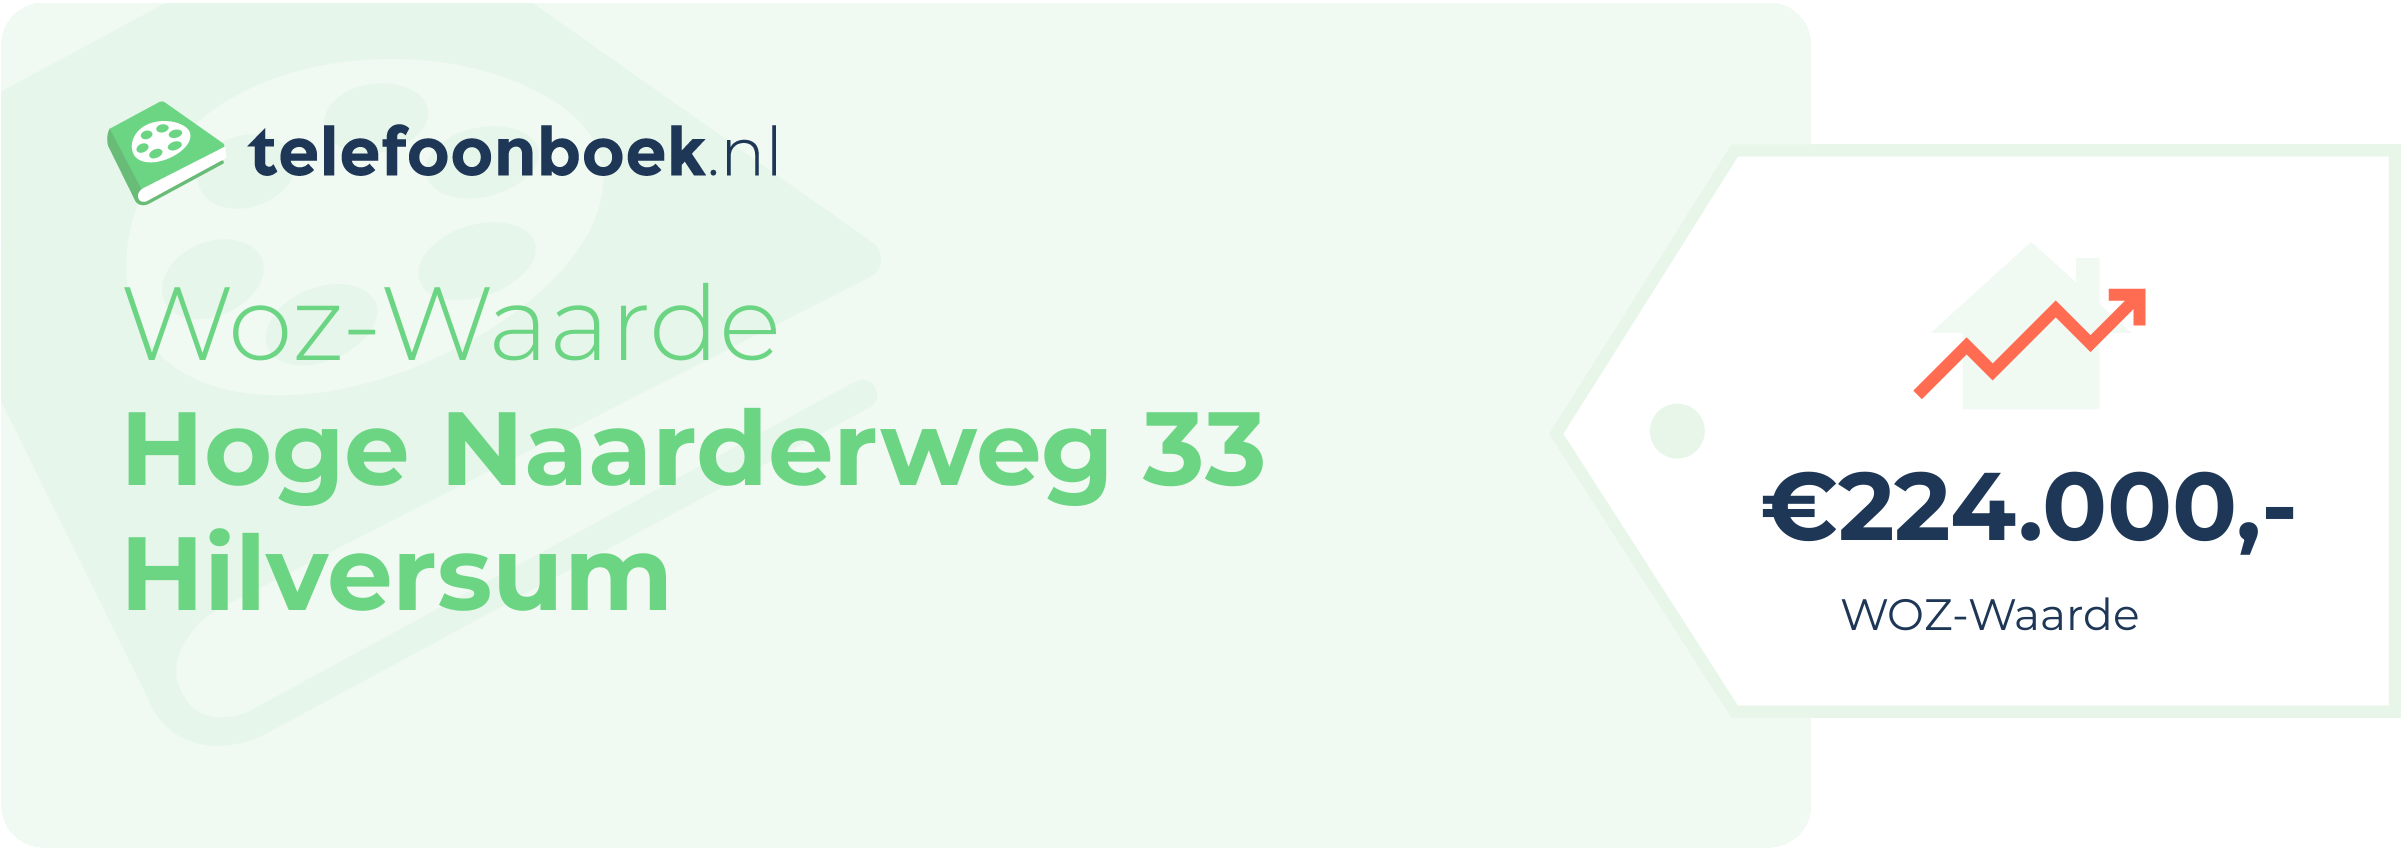 WOZ-waarde Hoge Naarderweg 33 Hilversum